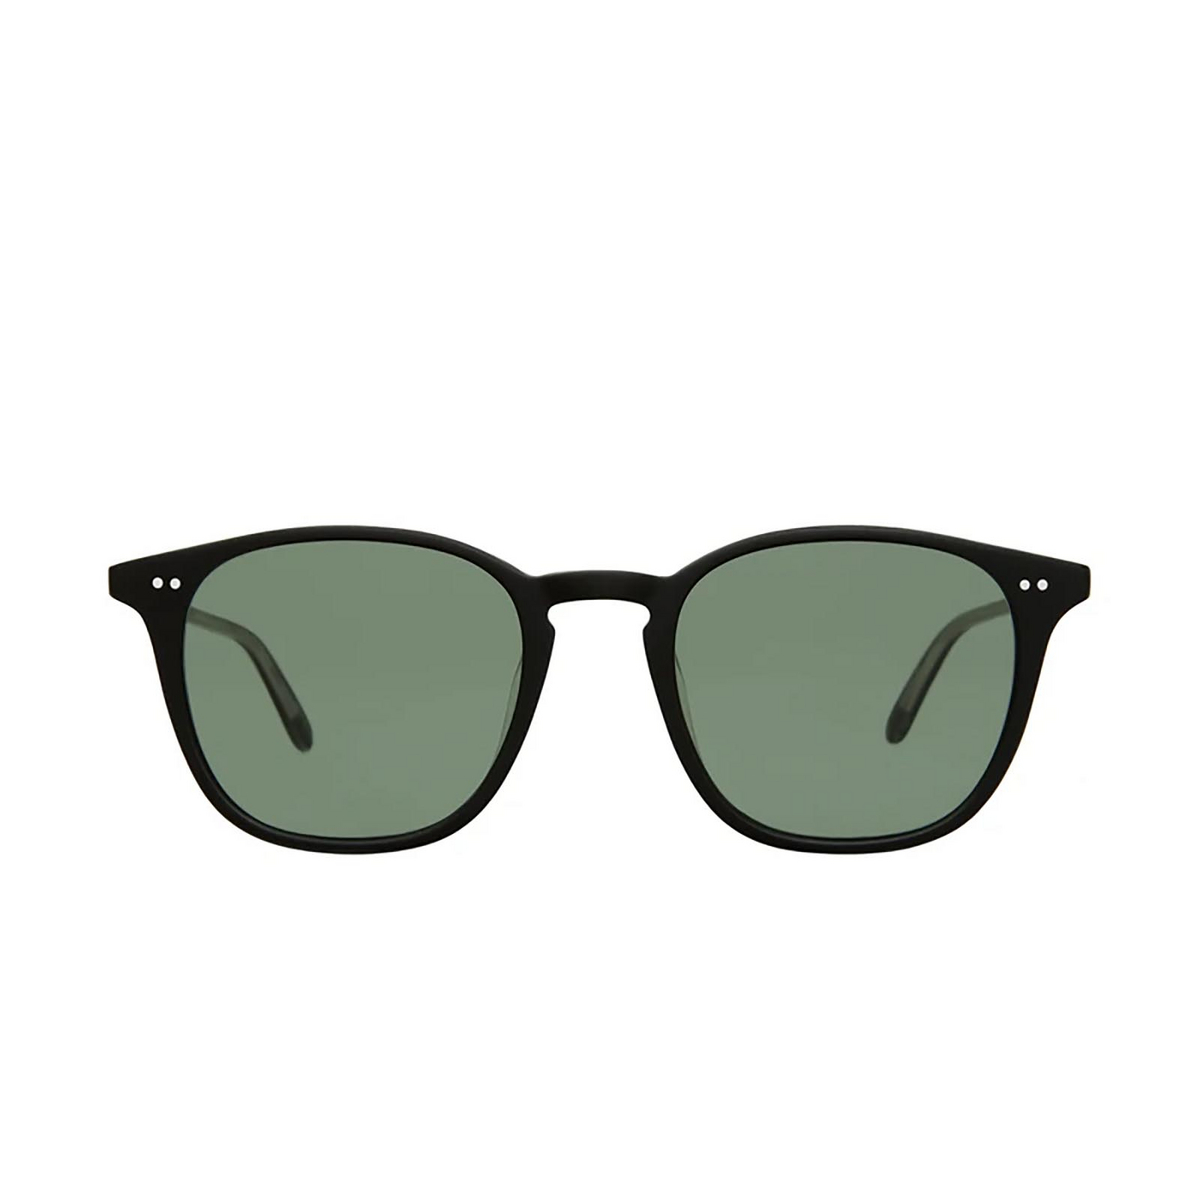 Garrett Leight® Square Sunglasses: Clark Sun color Matte Black MBK/SFPG15 - front view.